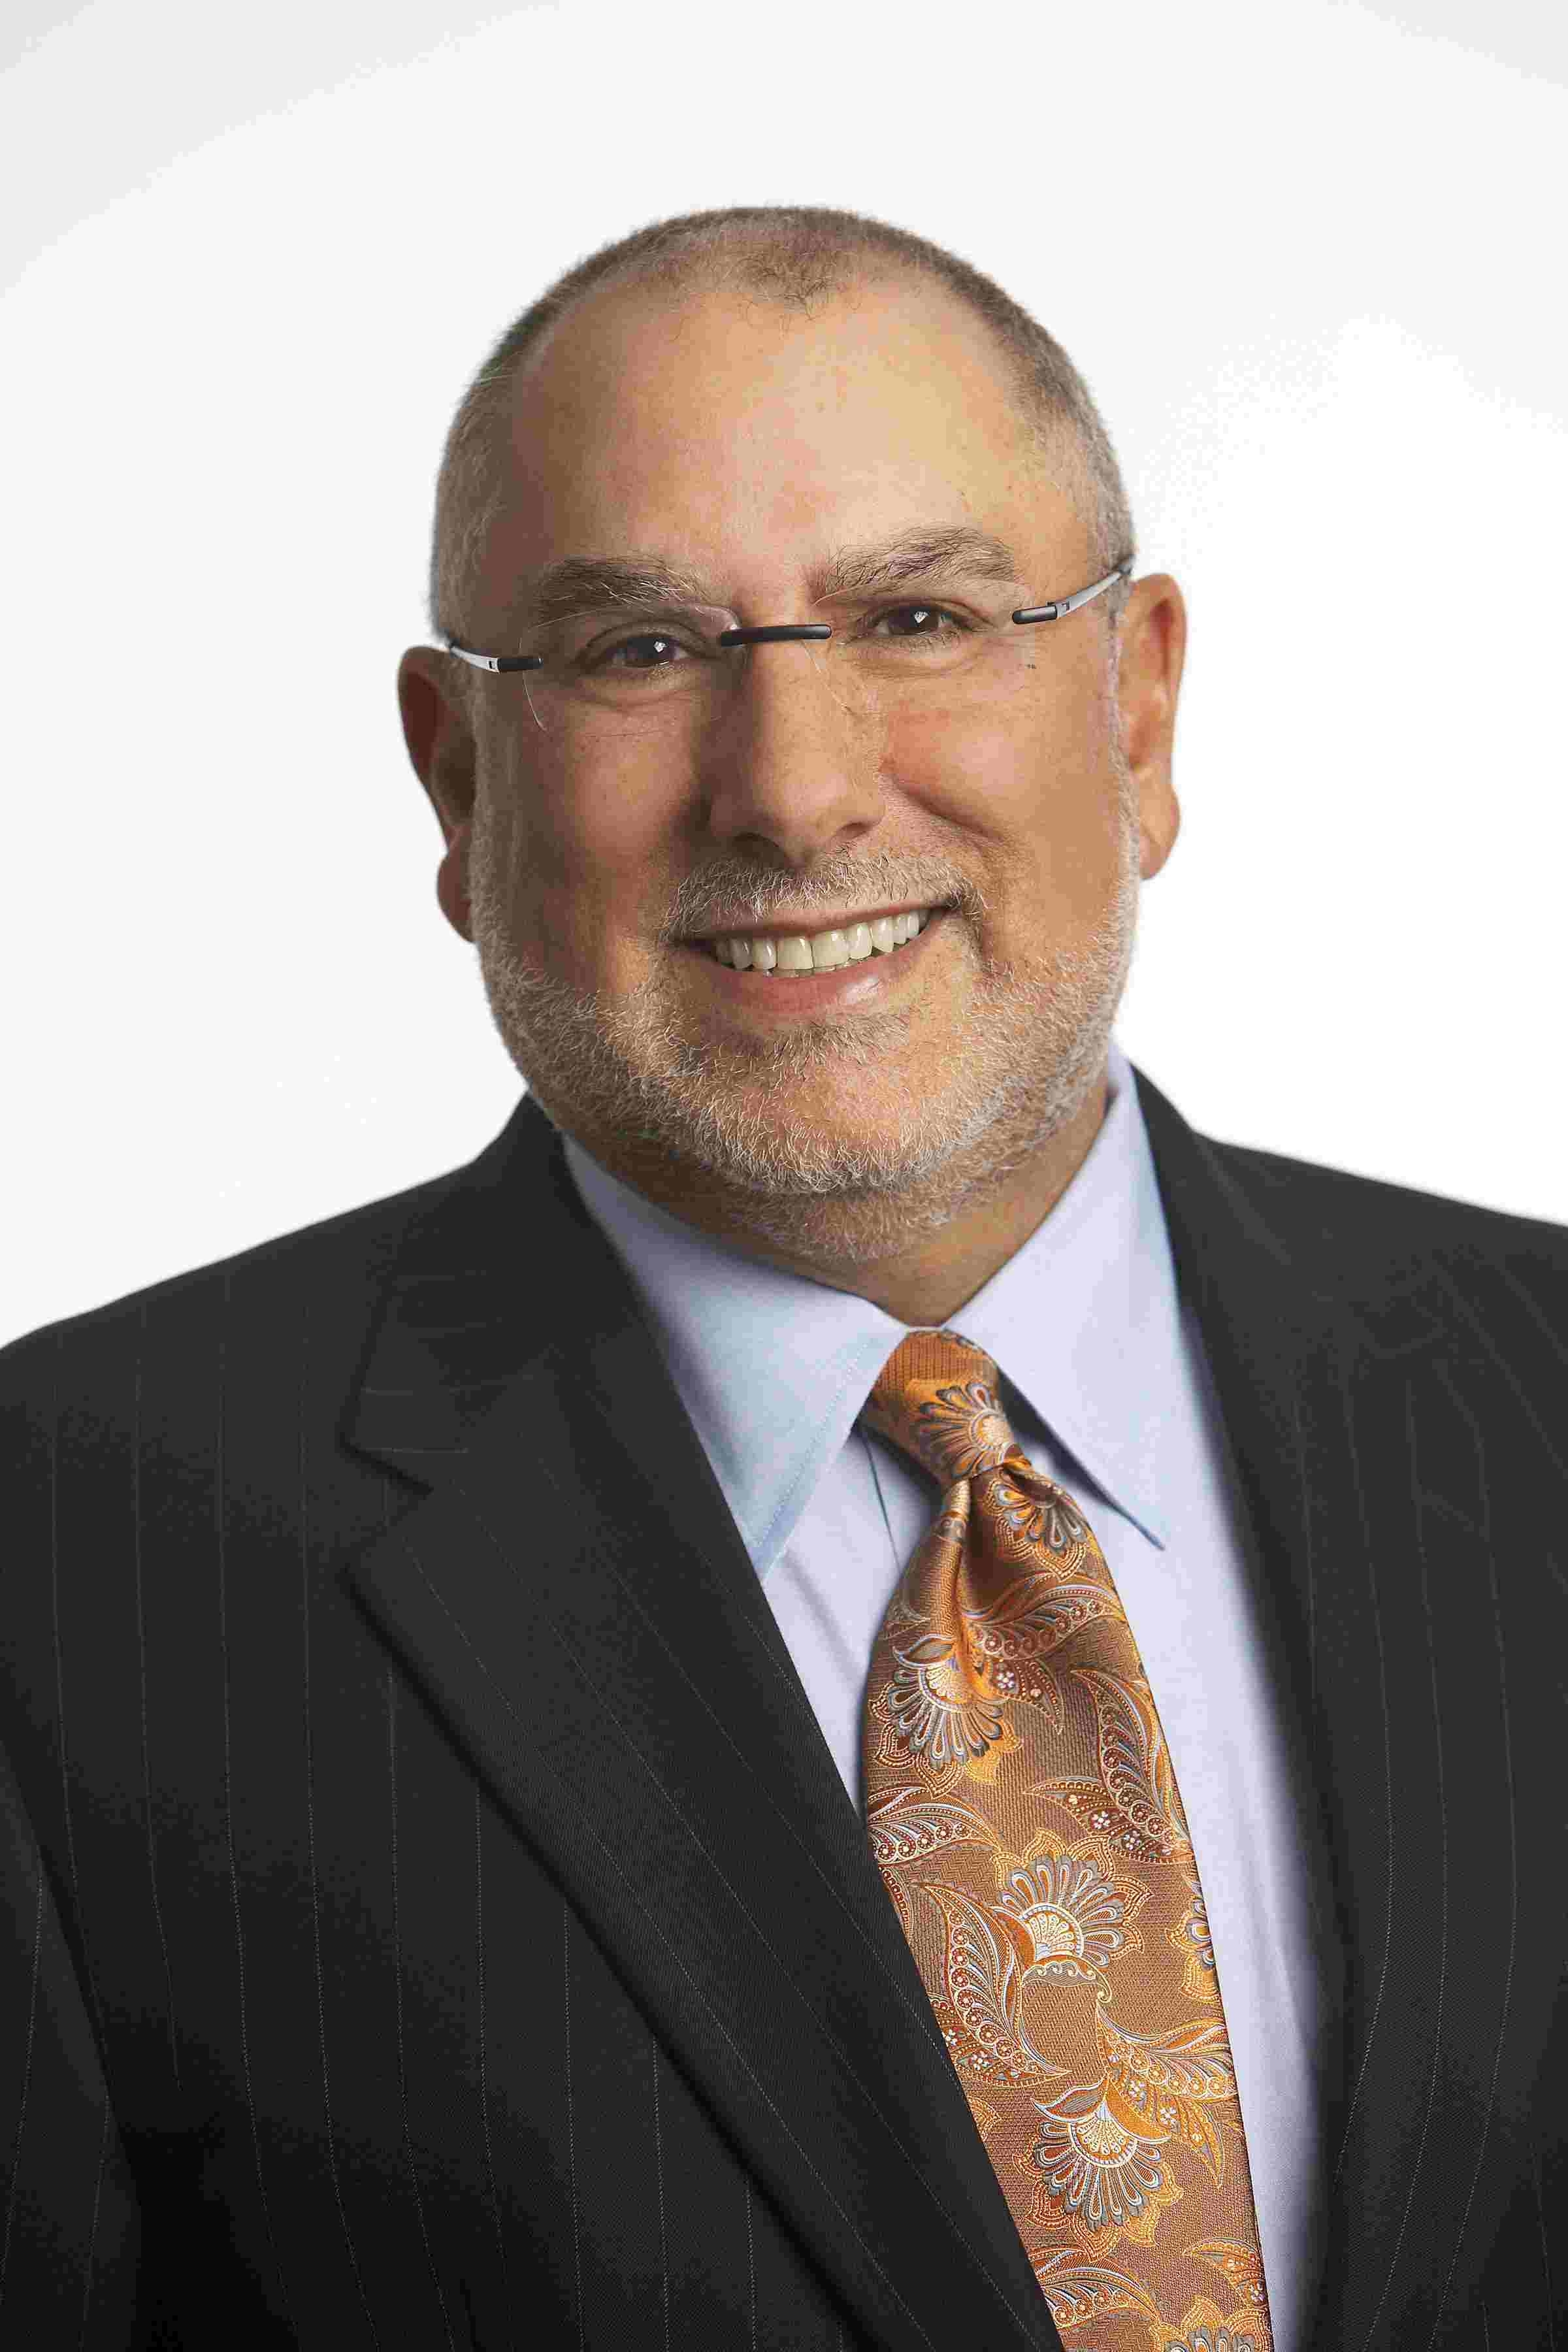 Glenn Lyon, Chairman and Chief Executive Officer, The Finish Line, Inc.